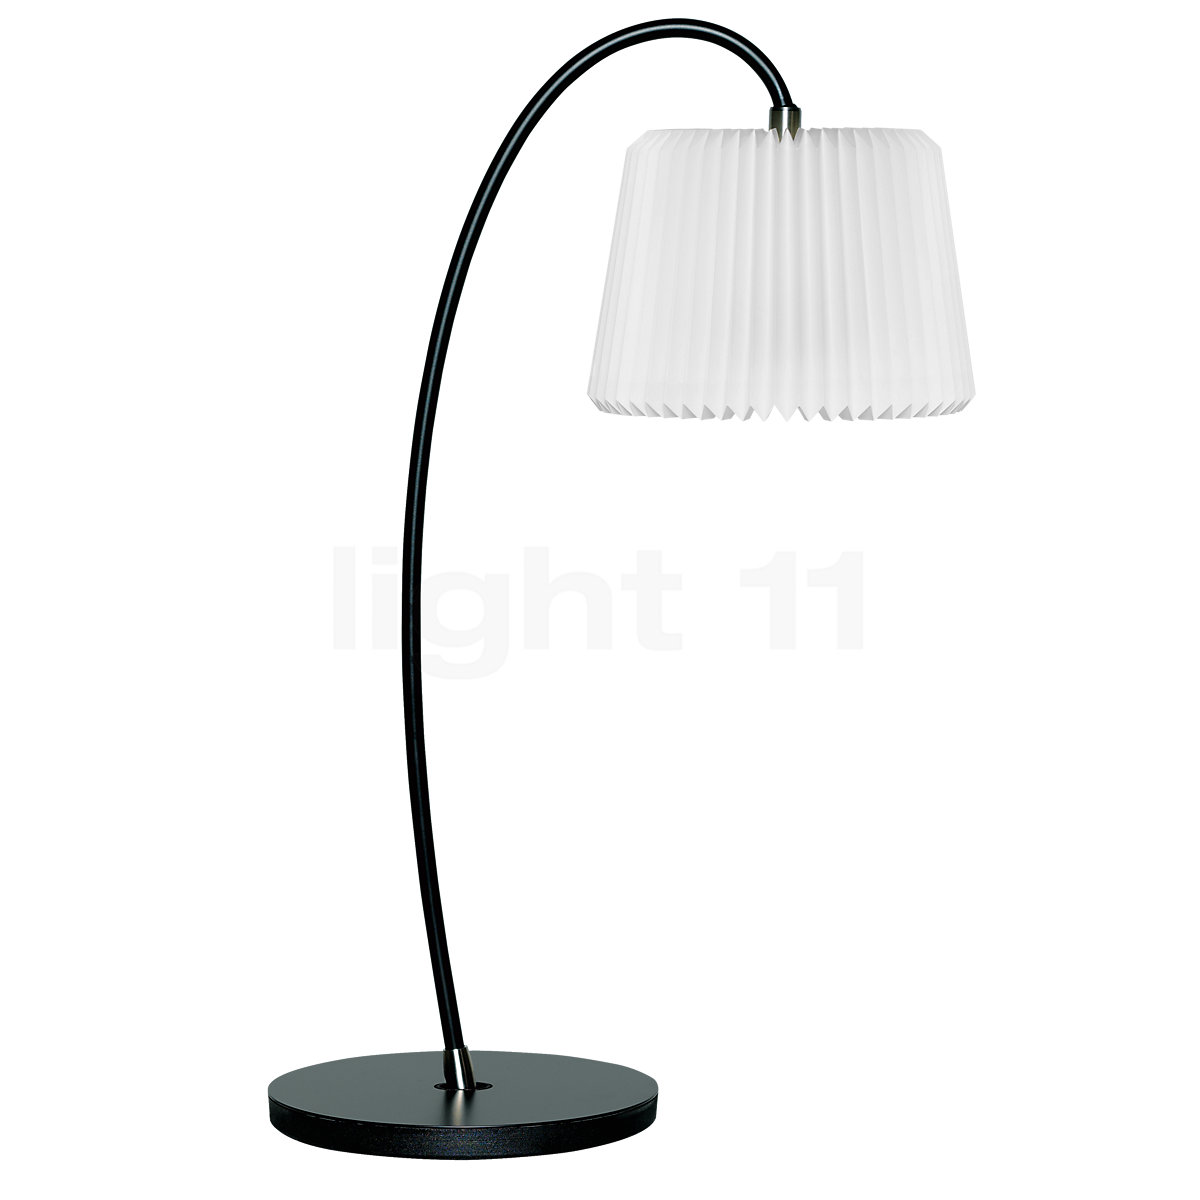 Le Klint Table Lamp at